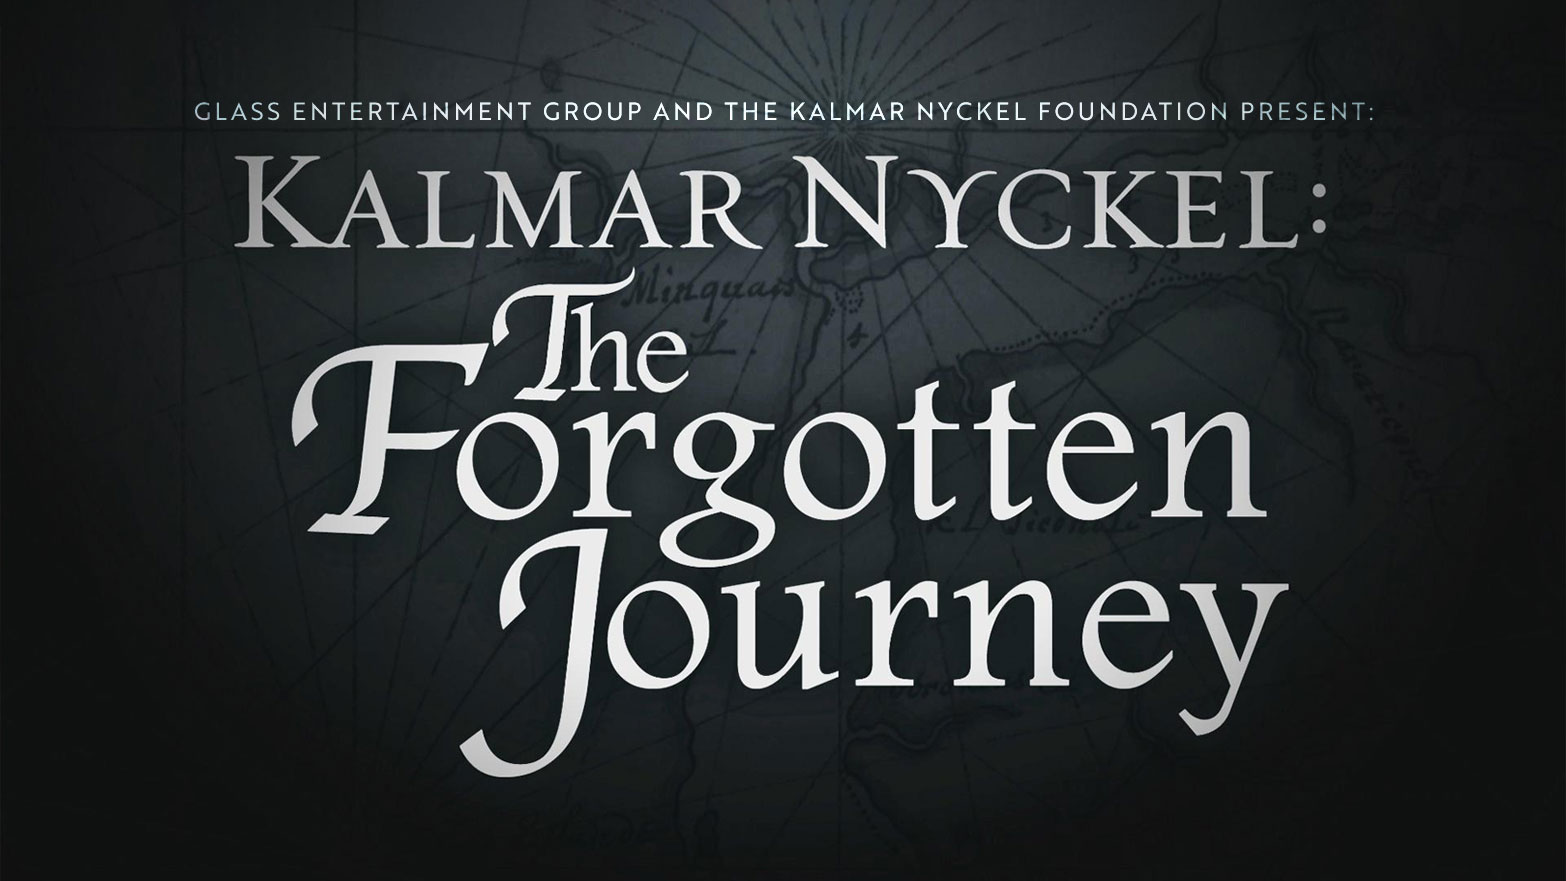 Kalmar Nyckel: The forgotton Journey